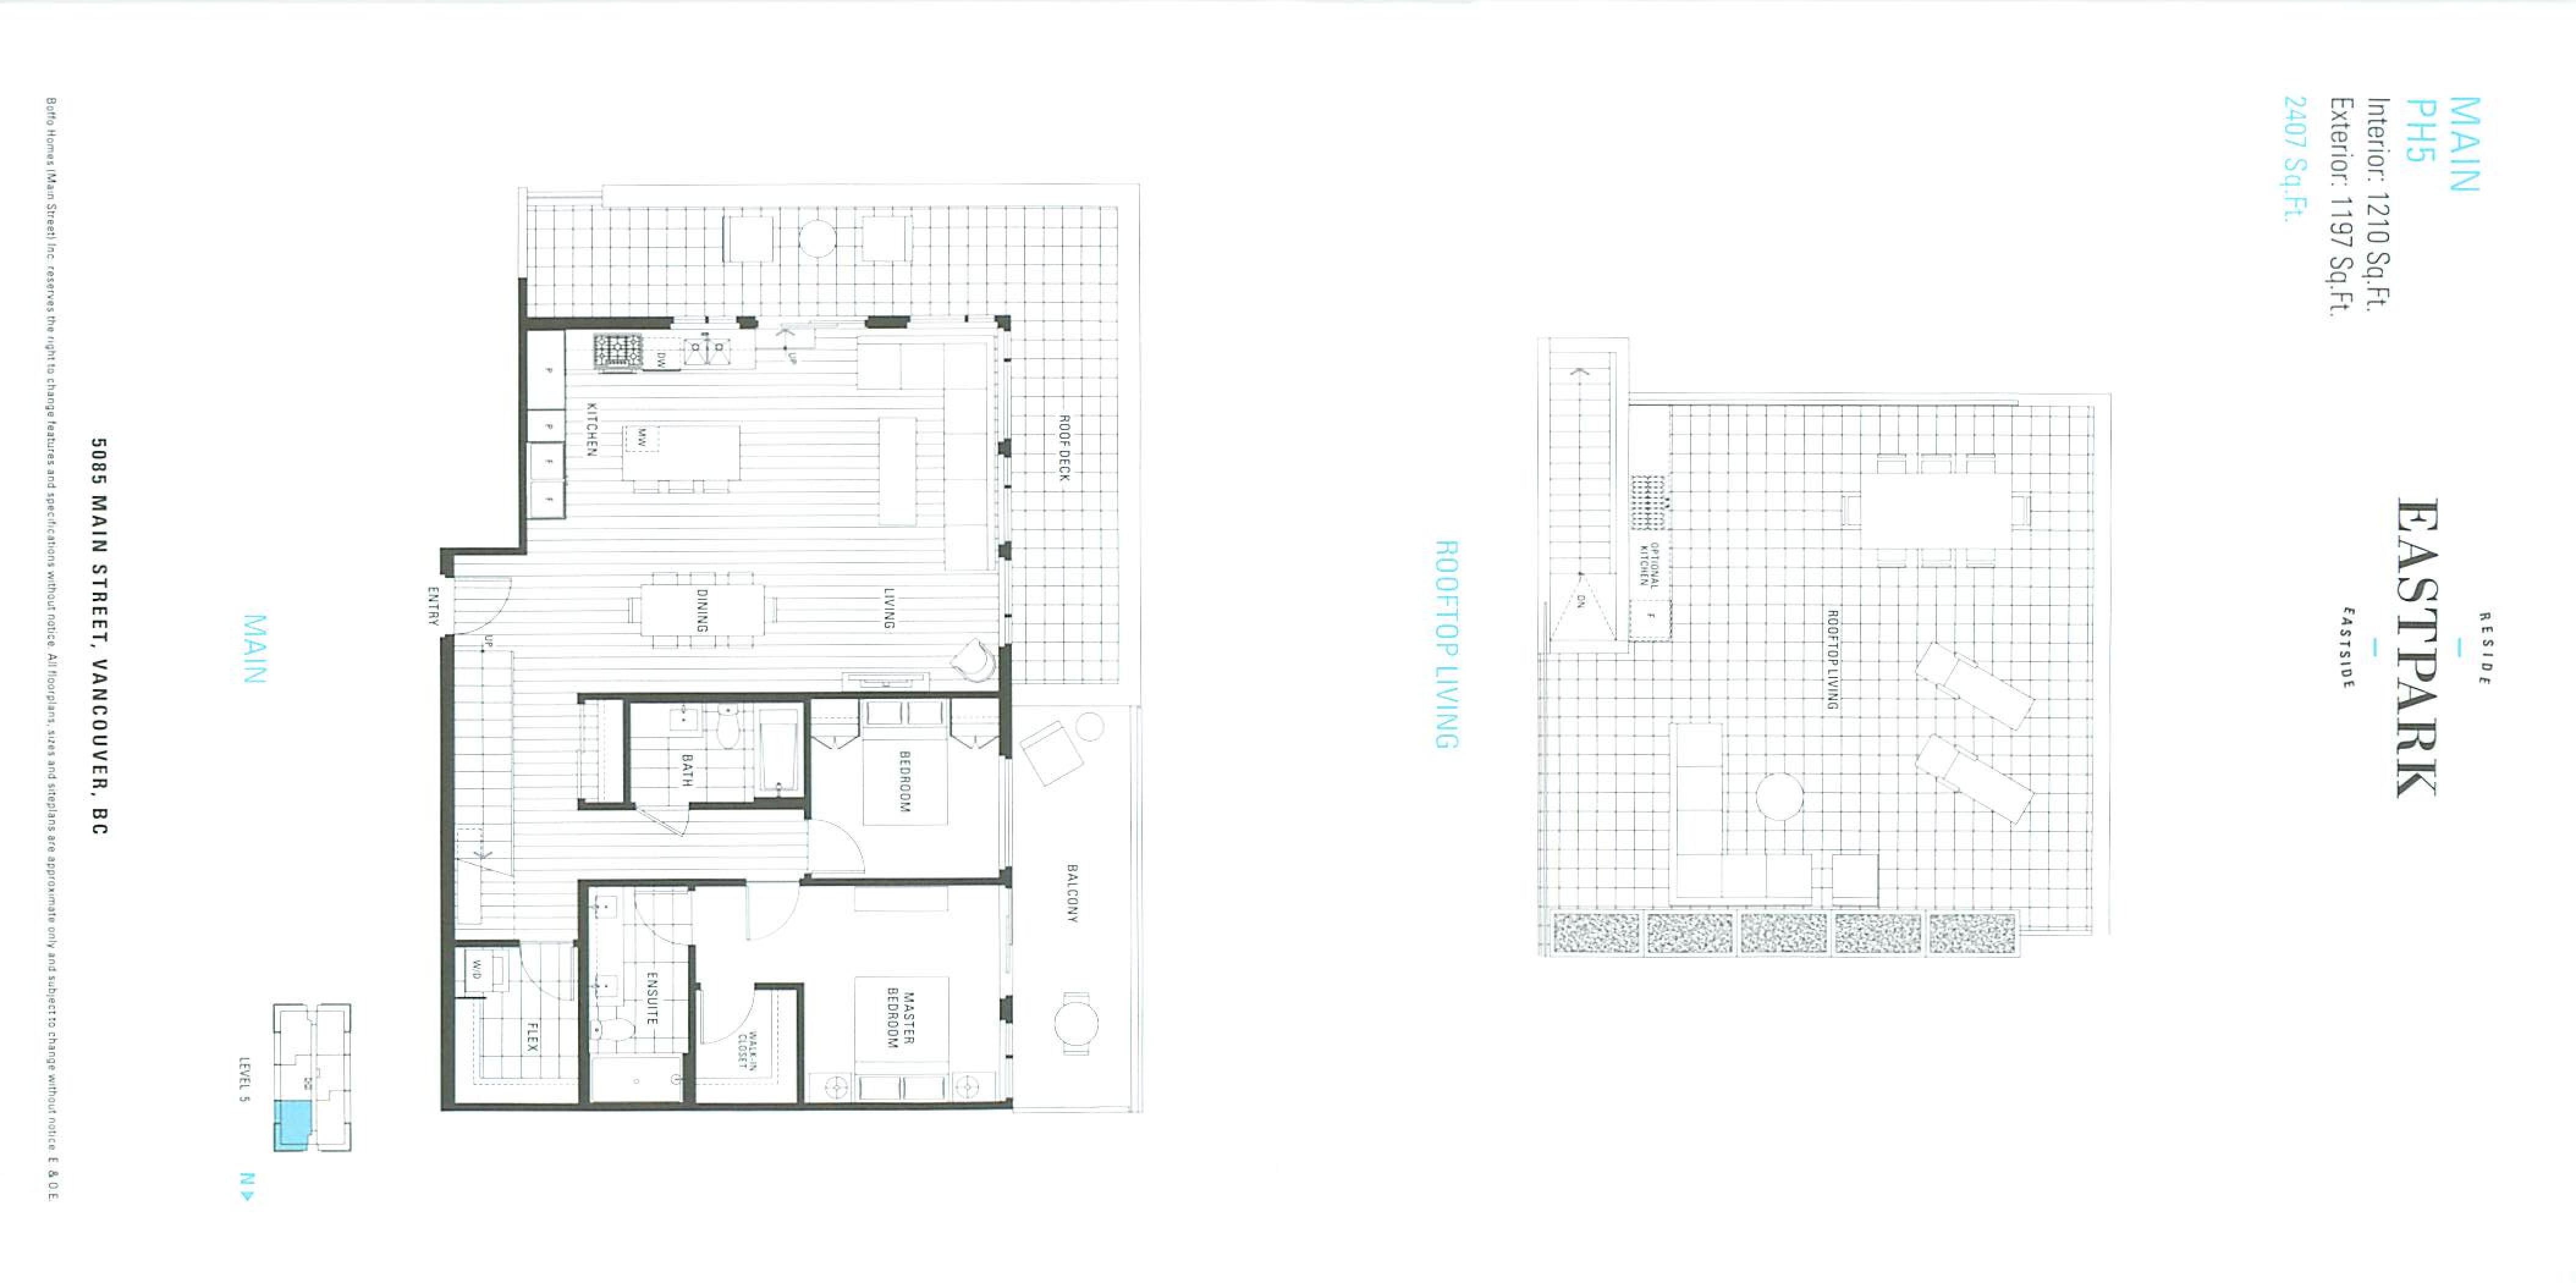 EastPark Main Larger Floor Plans Mike Stewart-page-003